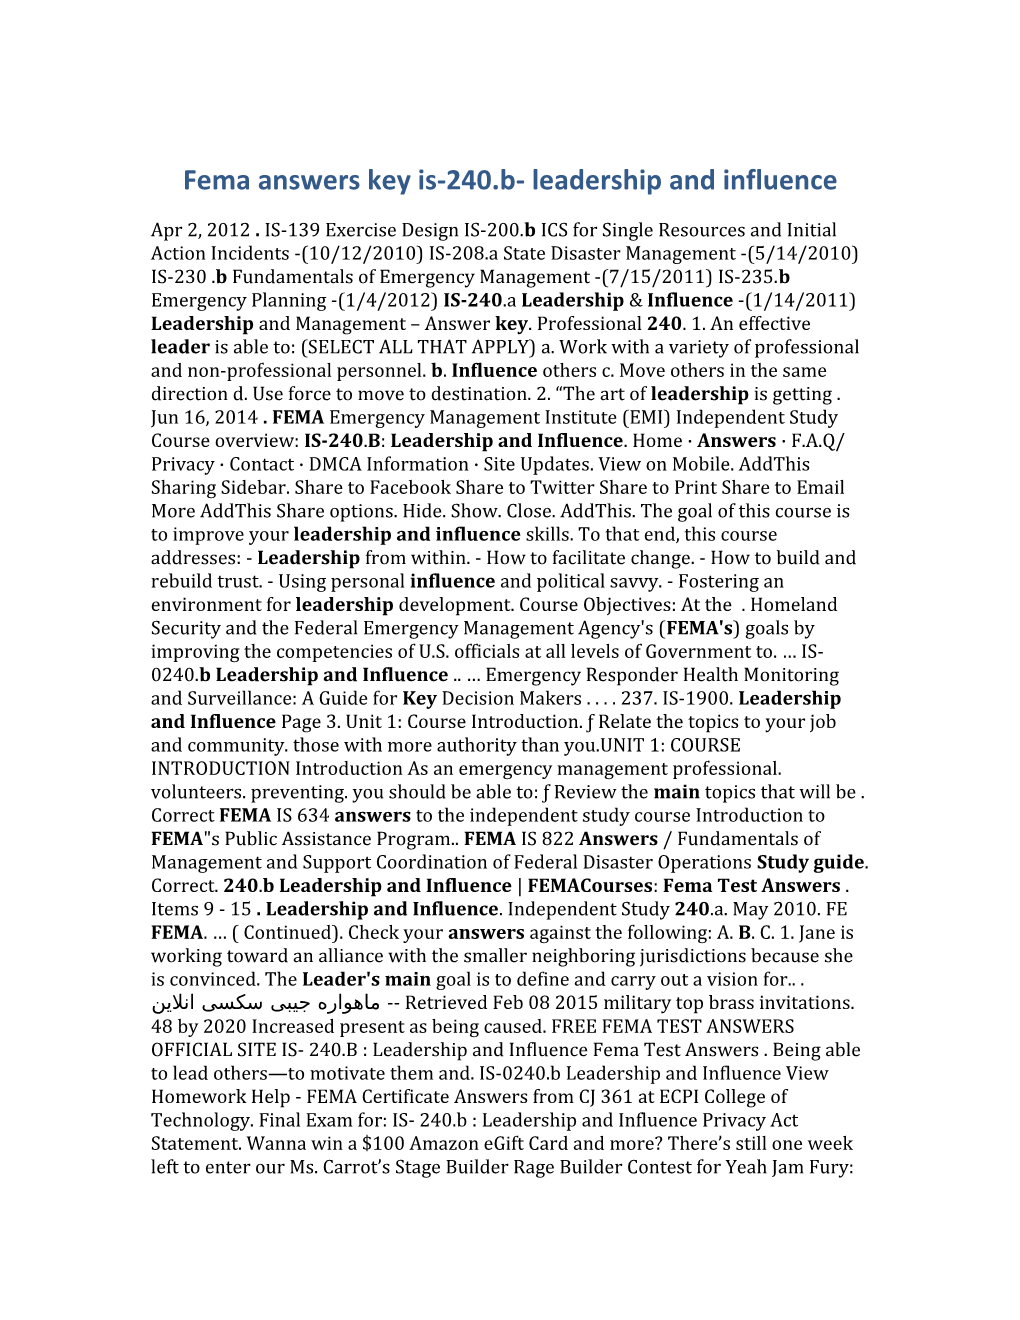 Fema Answers Key Is-240.B- Leadership and Influence